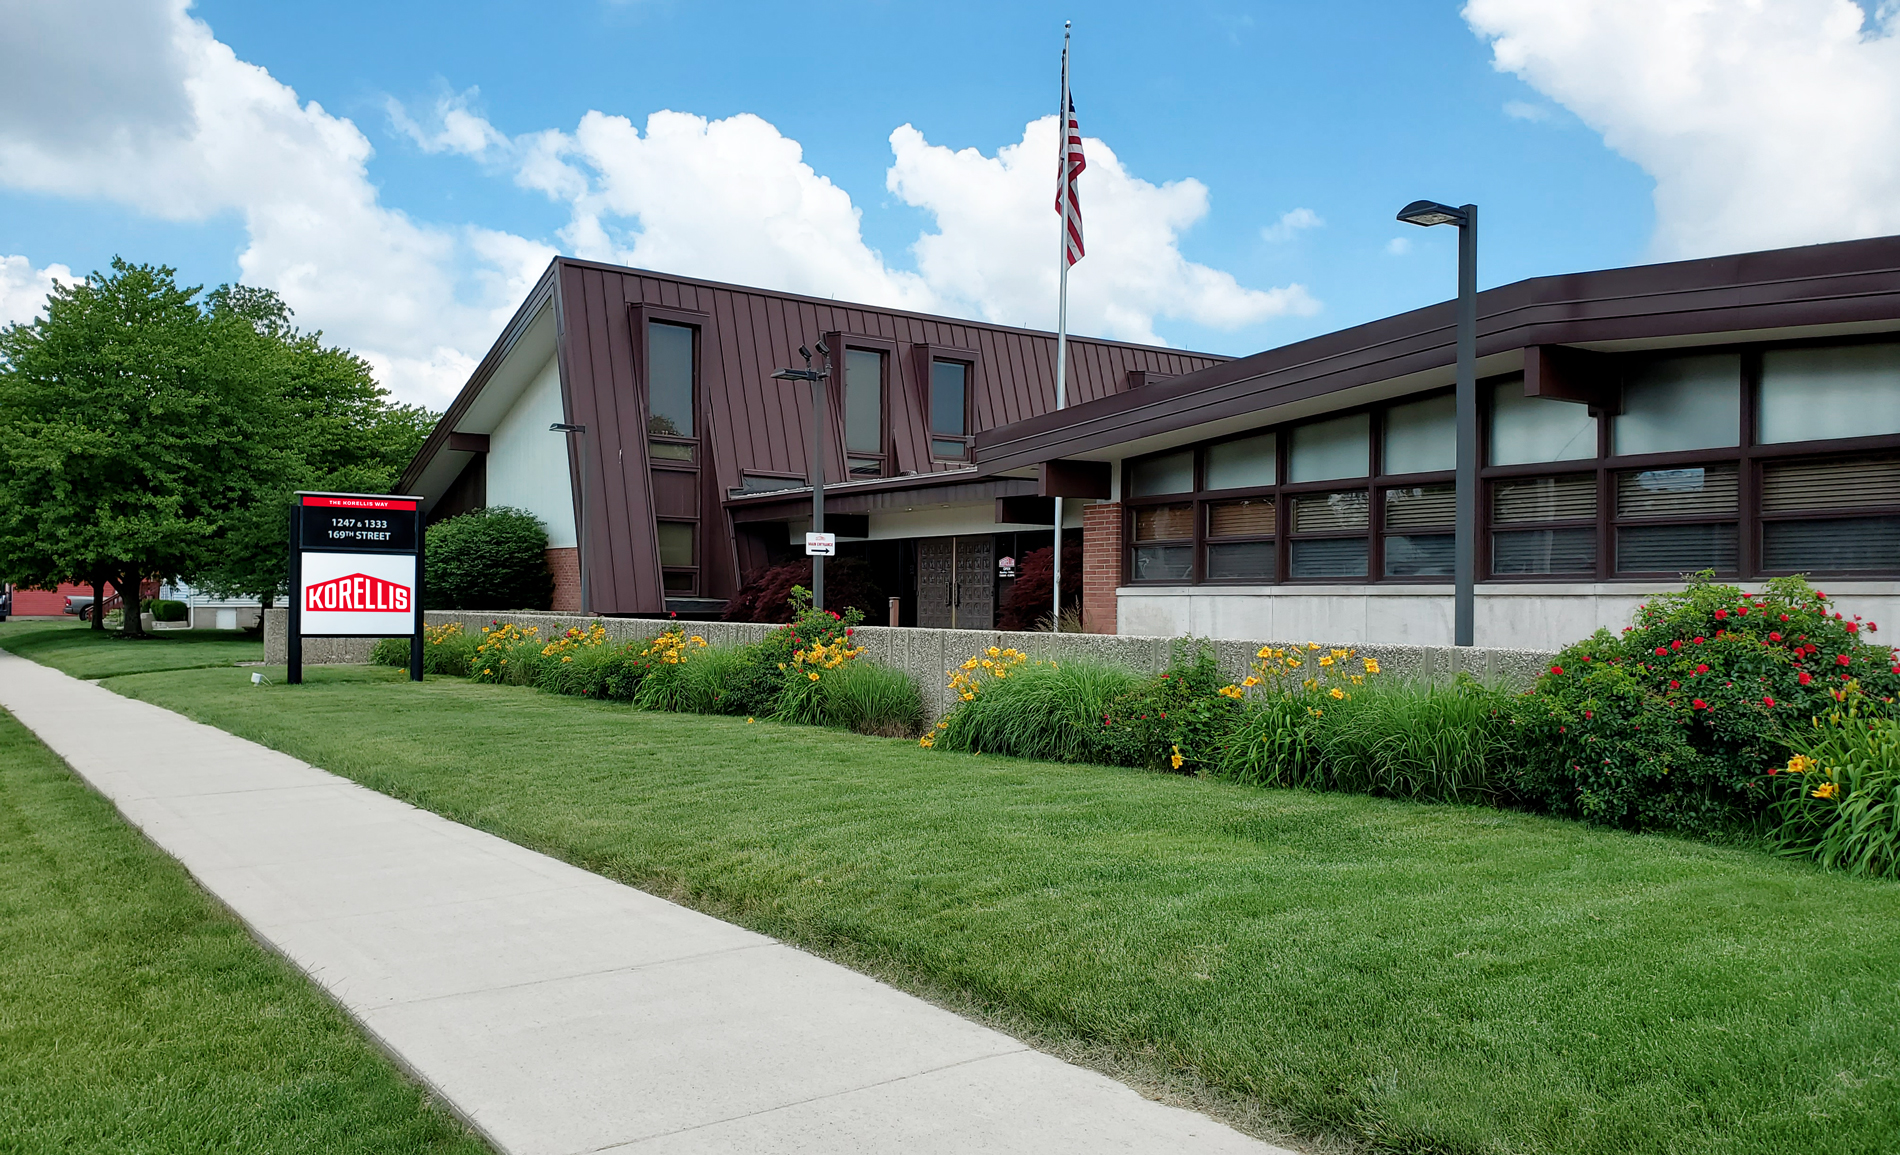 Korellis headquarters in Hammond, Indiana